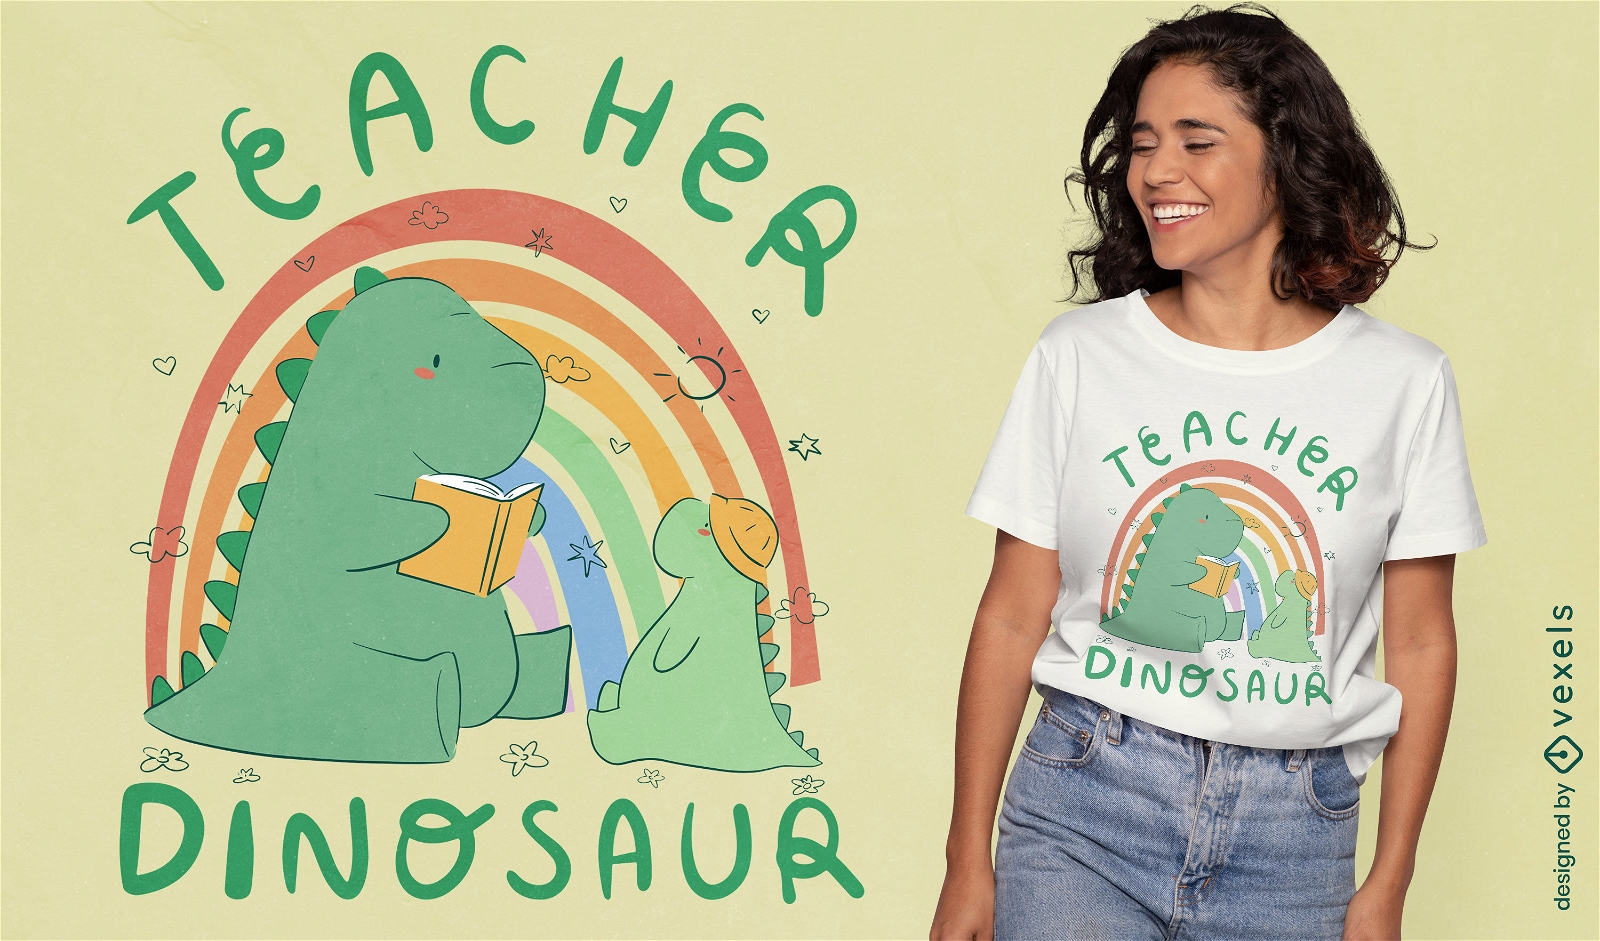 Dinosaur teacher t-shirt design